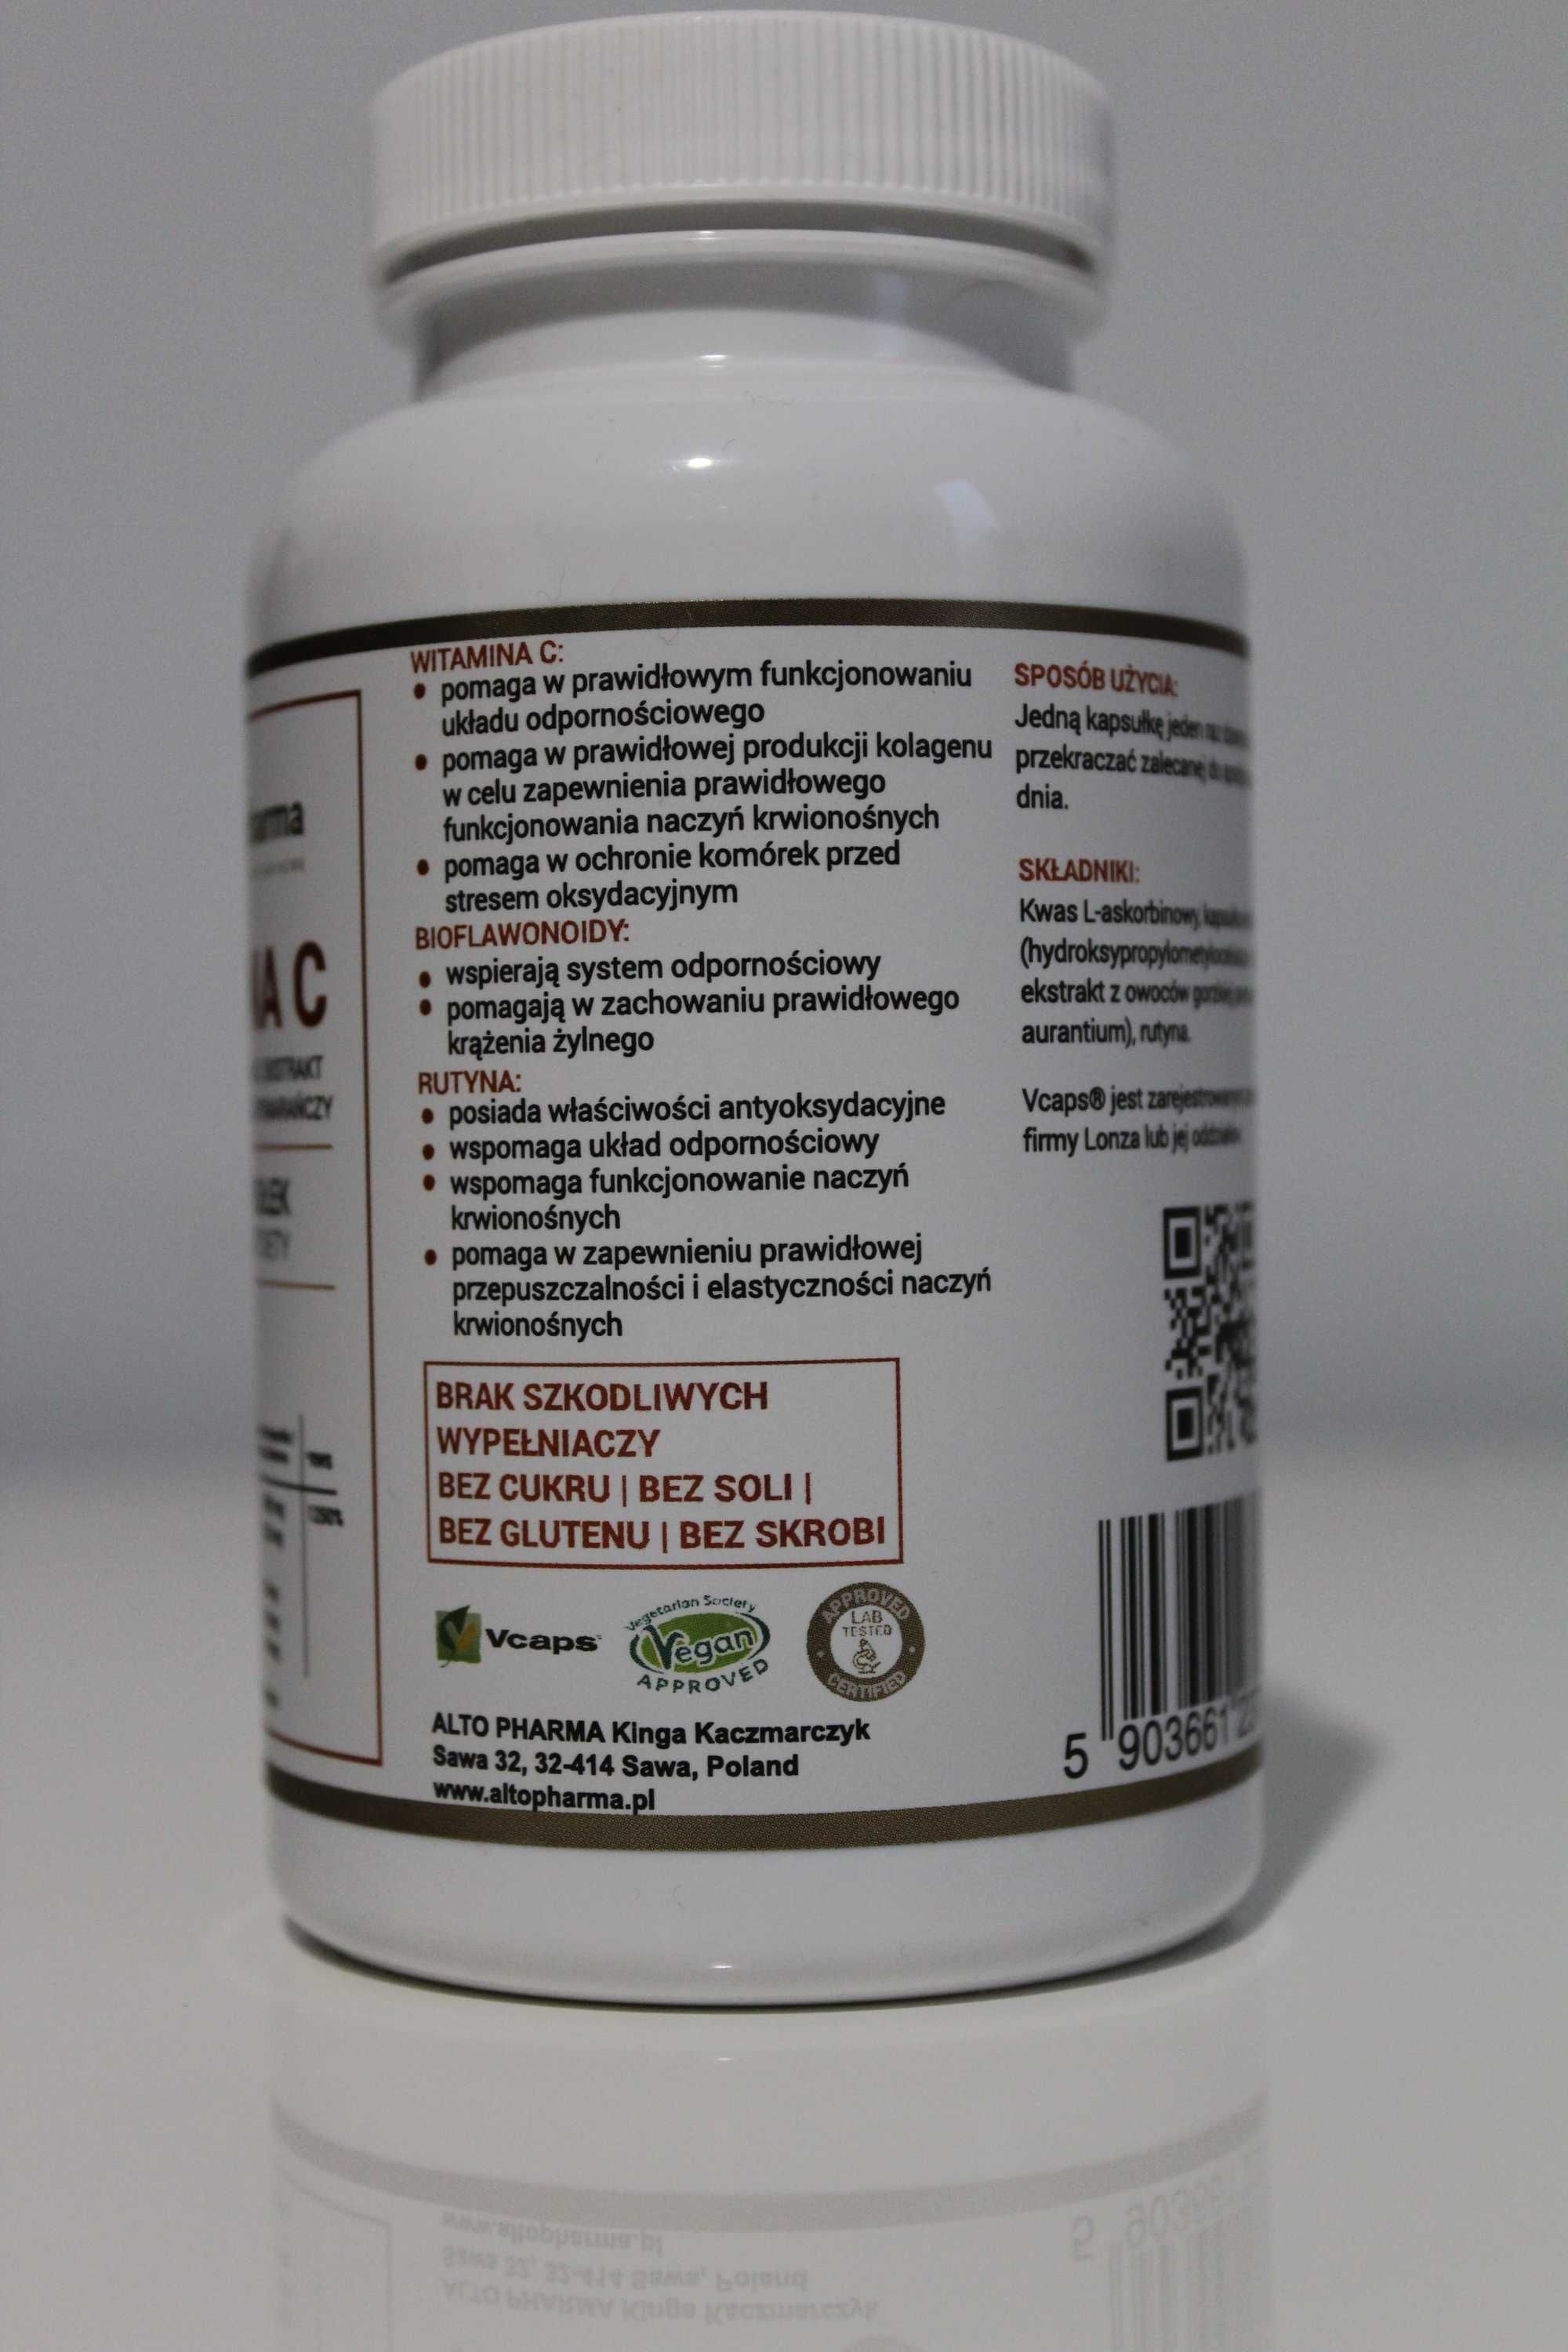 Altopharma Rutyna witamina C 1000 mg 120 kapsułek